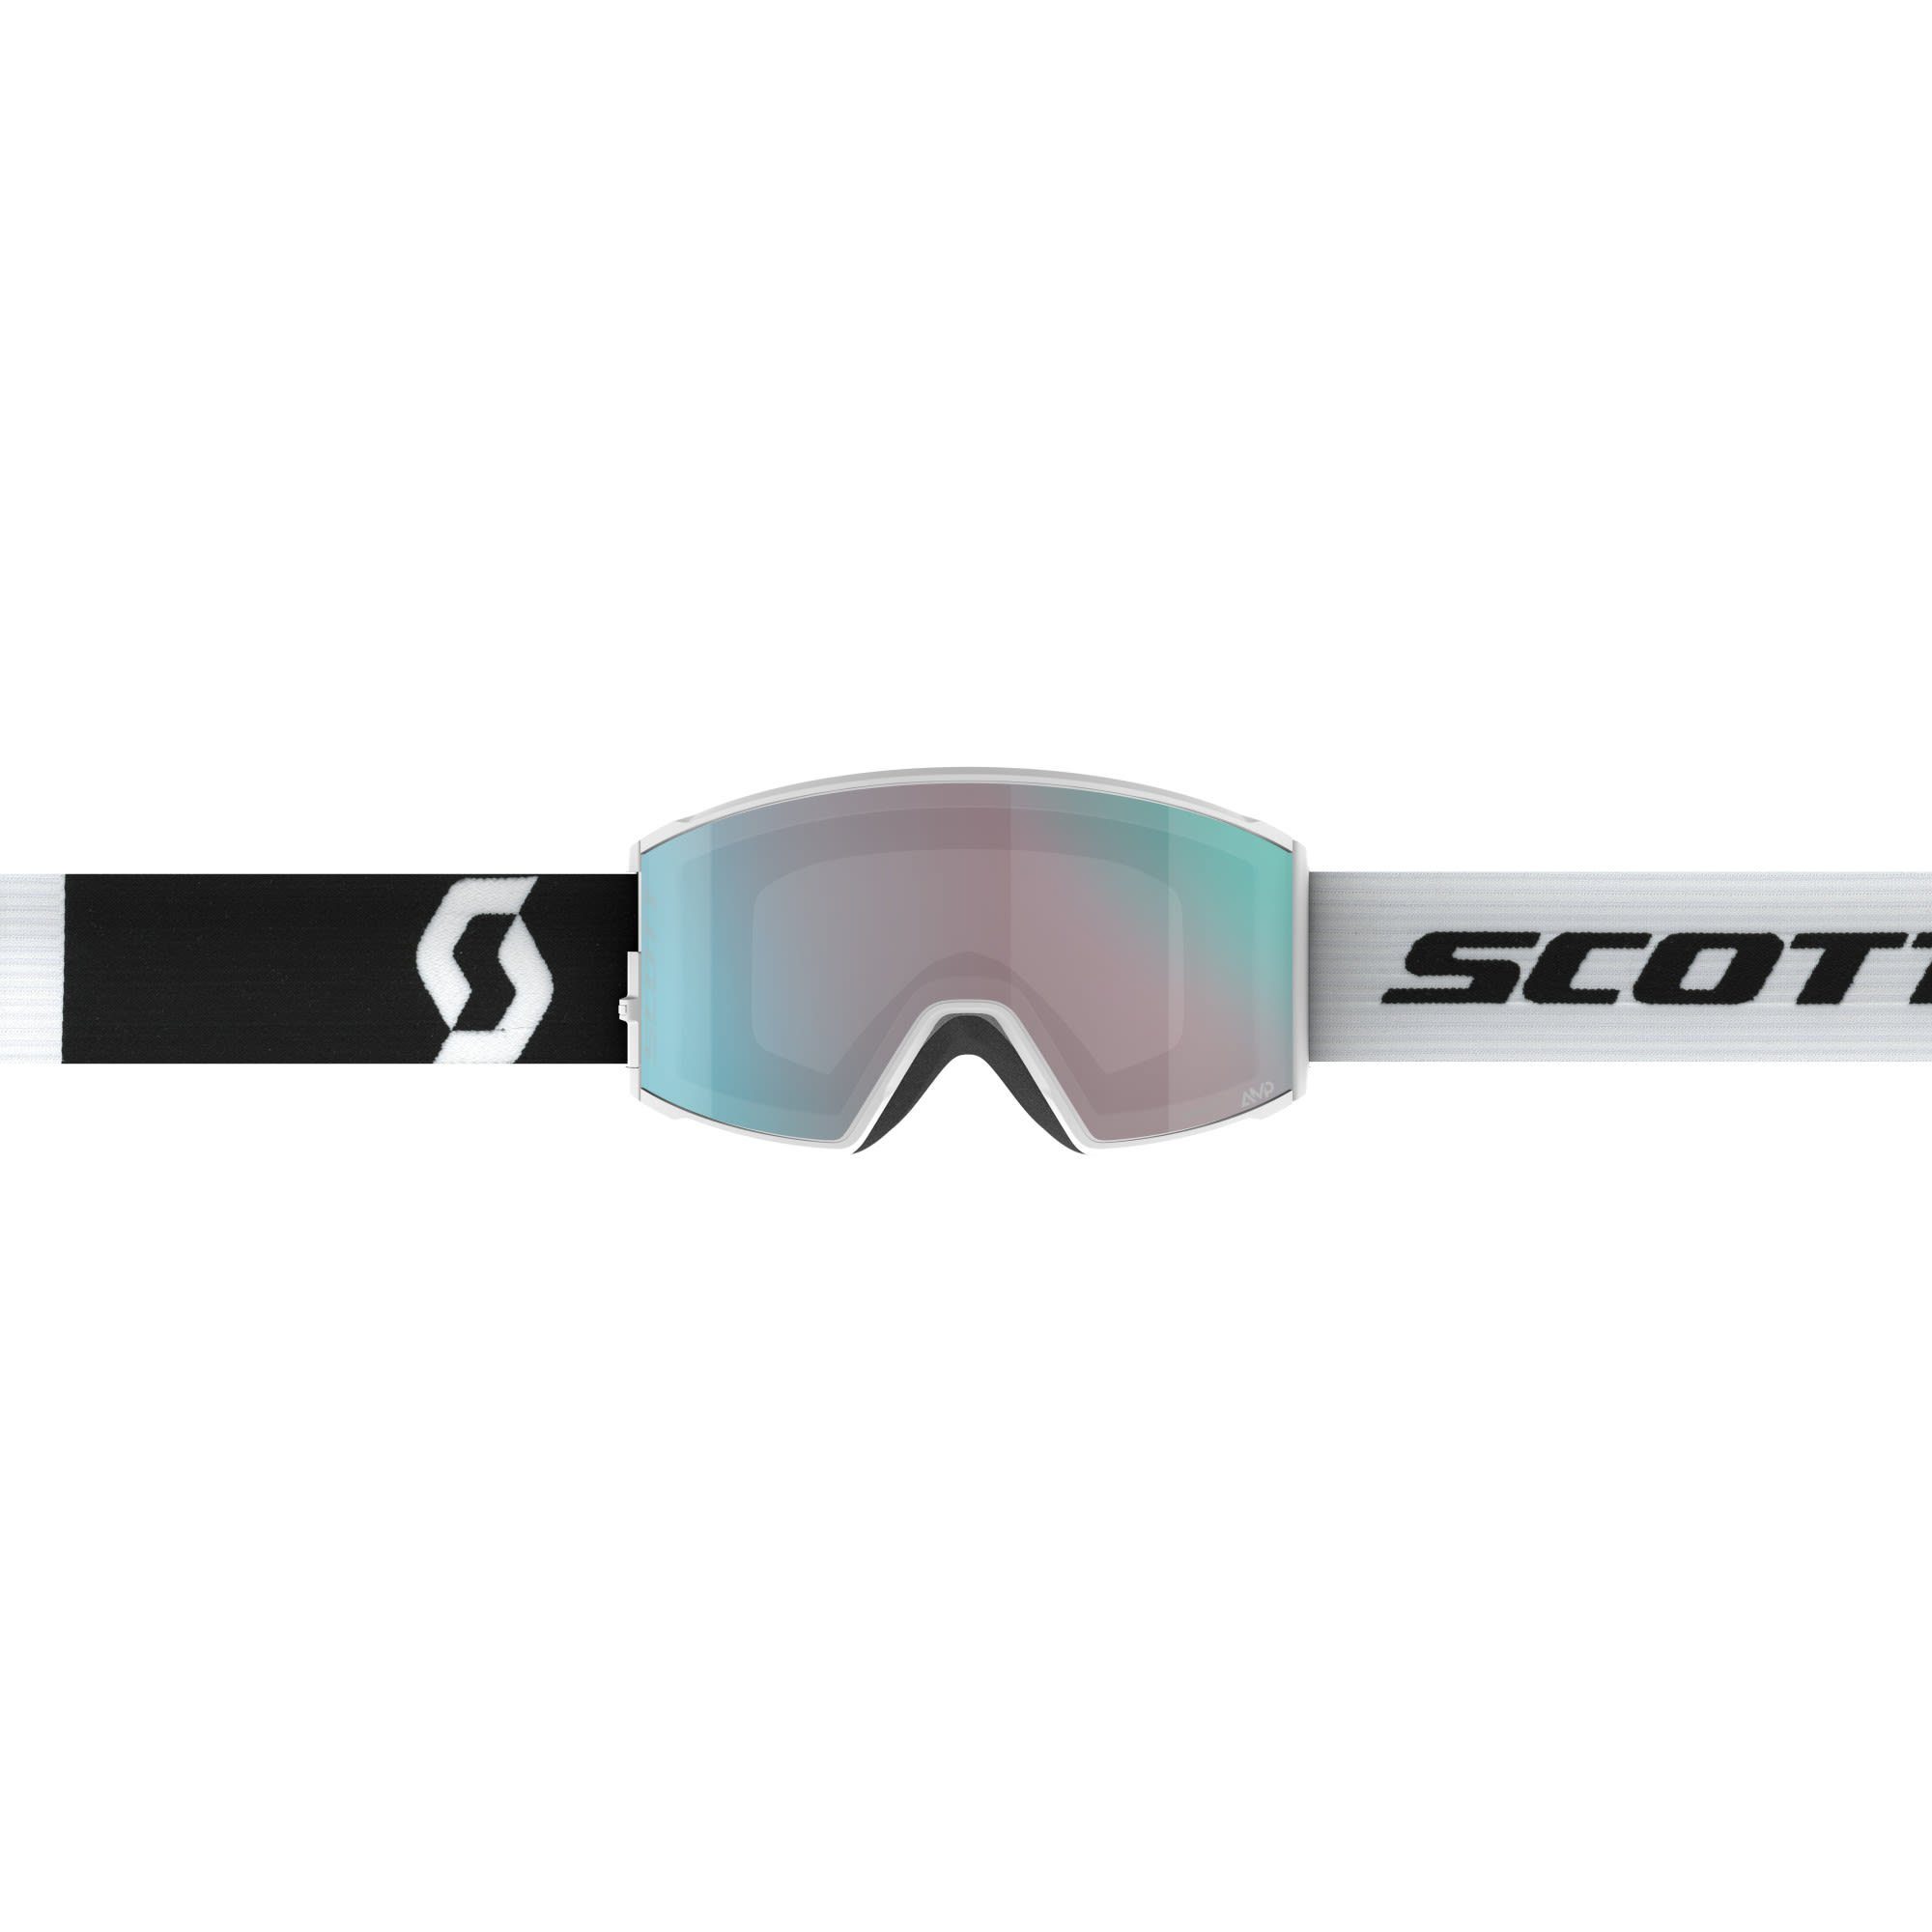 Team White Enhancer Black Scott - Aqua - Scott Skibrille React Chrome Accessoires Goggle